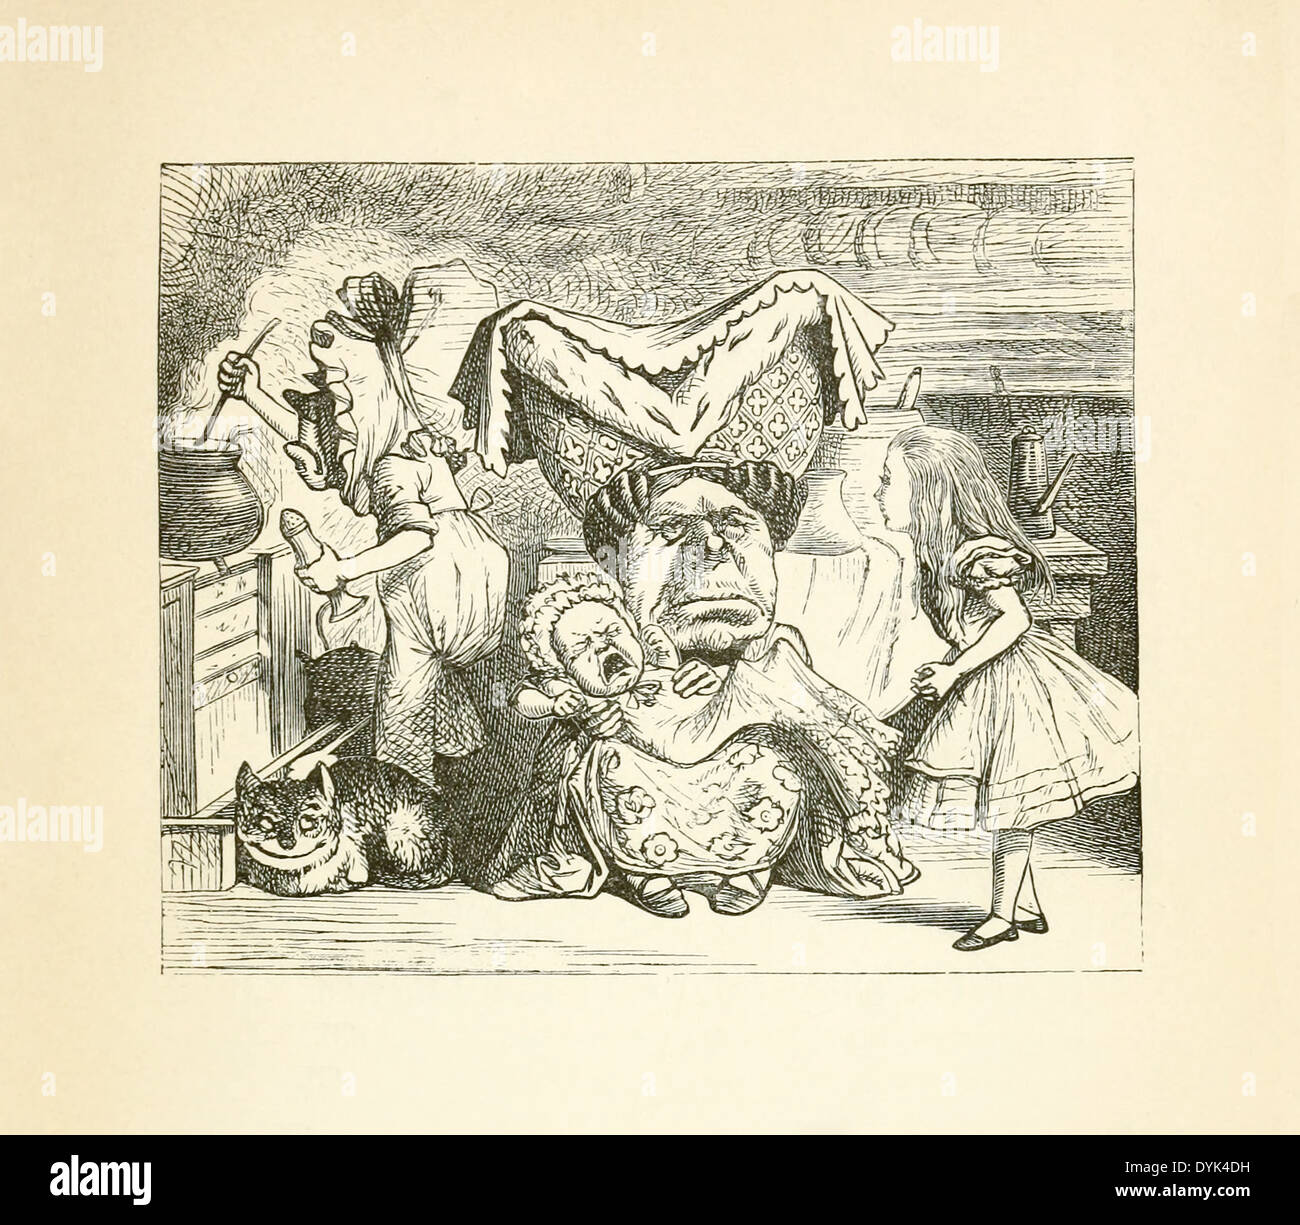 https://c8.alamy.com/comp/DYK4DH/john-tenniel-1820-1914-illustration-from-lewis-carrolls-alice-in-wonderland-DYK4DH.jpg